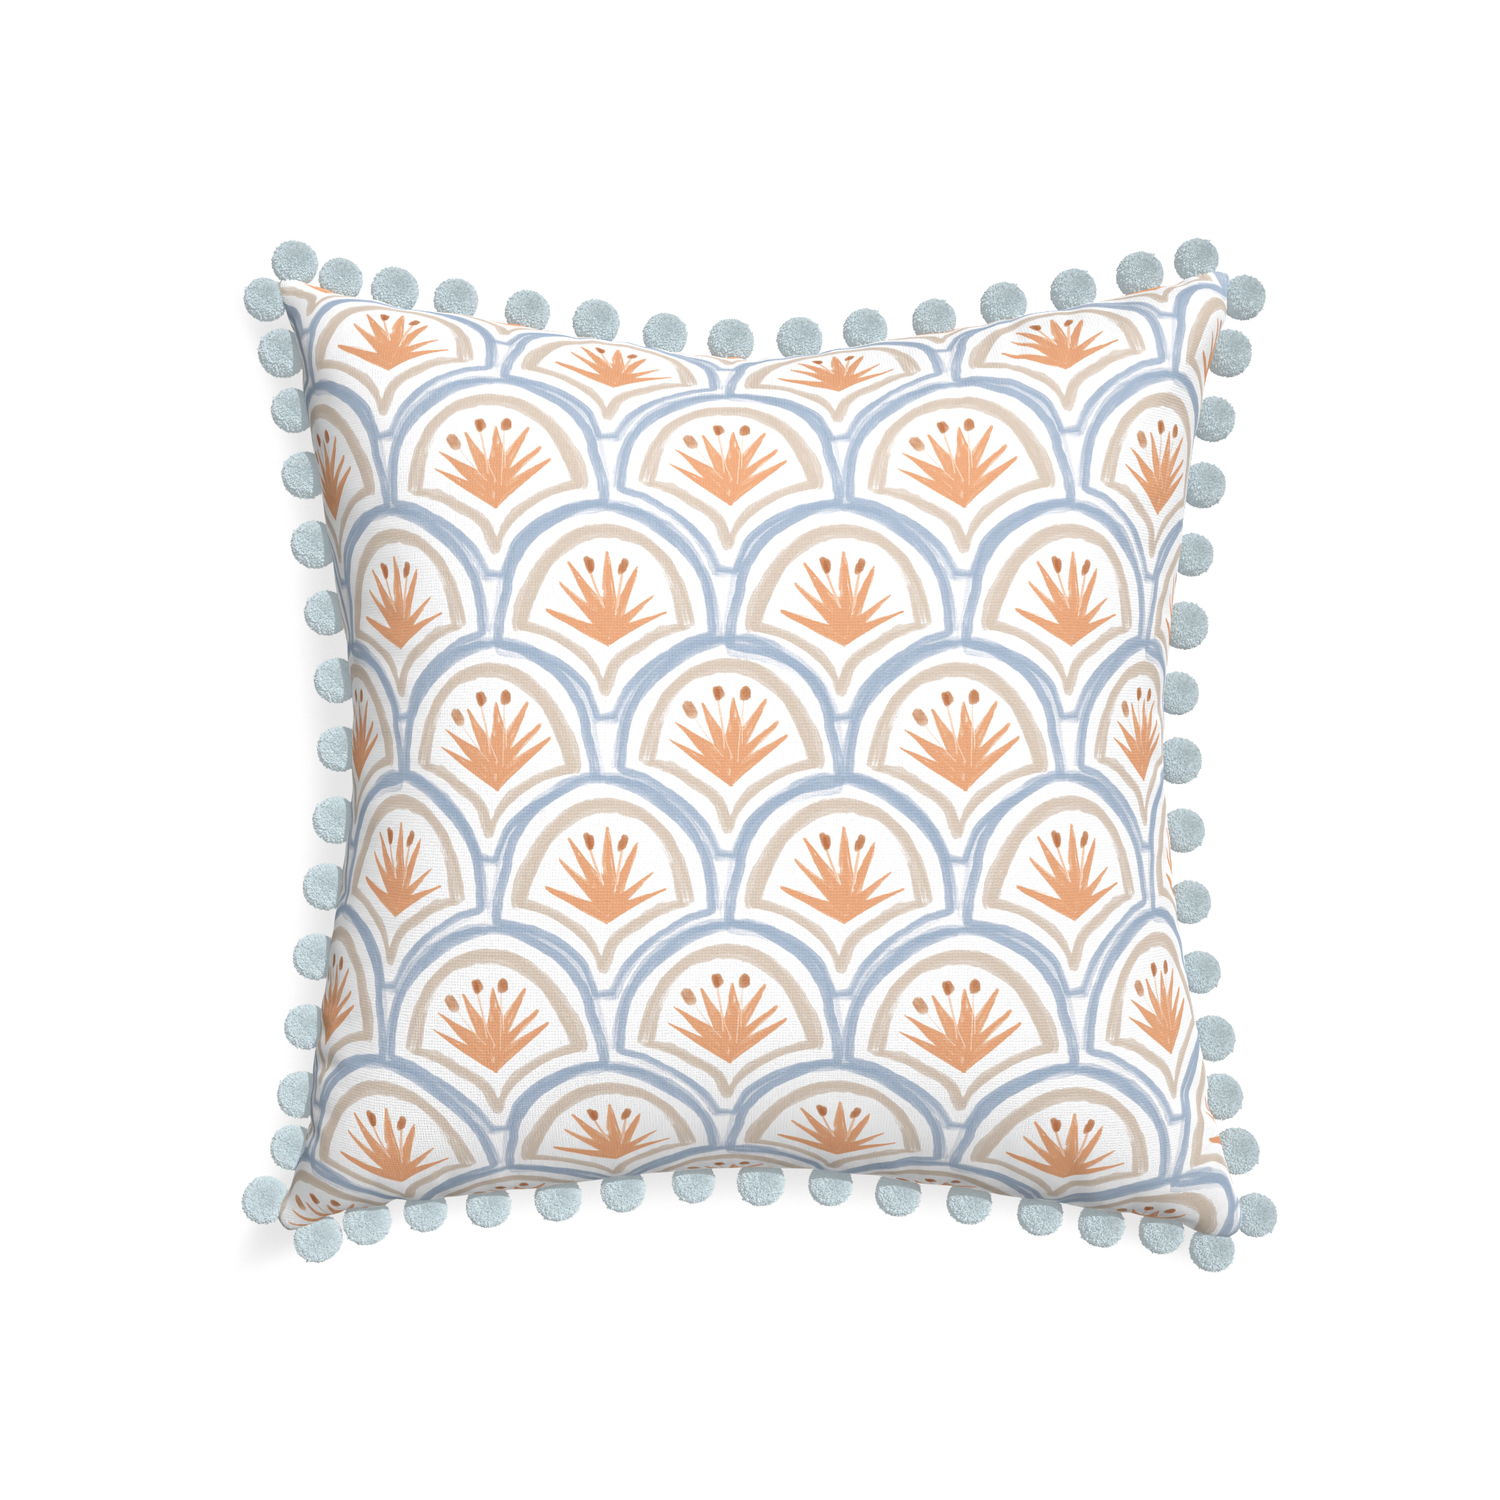 22-square thatcher apricot custom art deco palm patternpillow with powder pom pom on white background